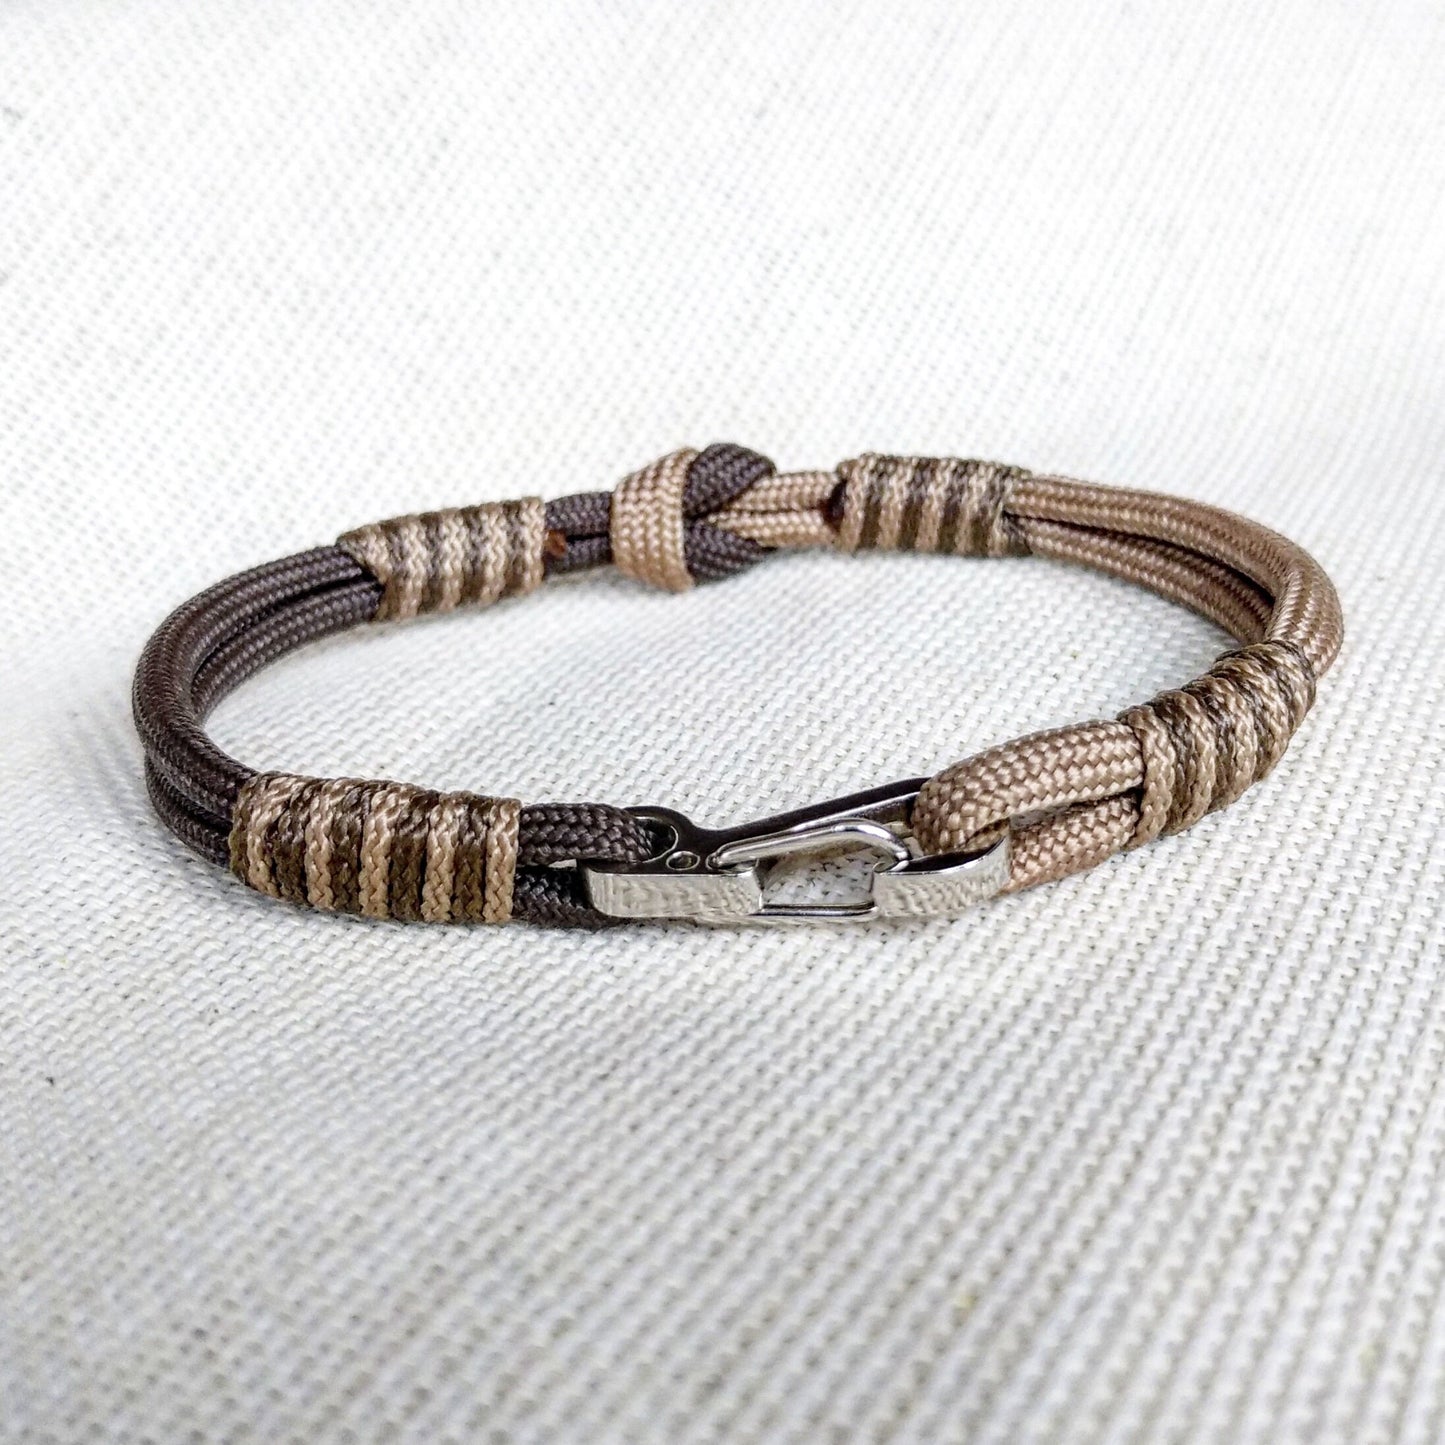 Viking  bracelet / Scandinavian  jewelry / gift for  him / paracord  bracelet / parachute  cord  / viking cuff  / biker bangle